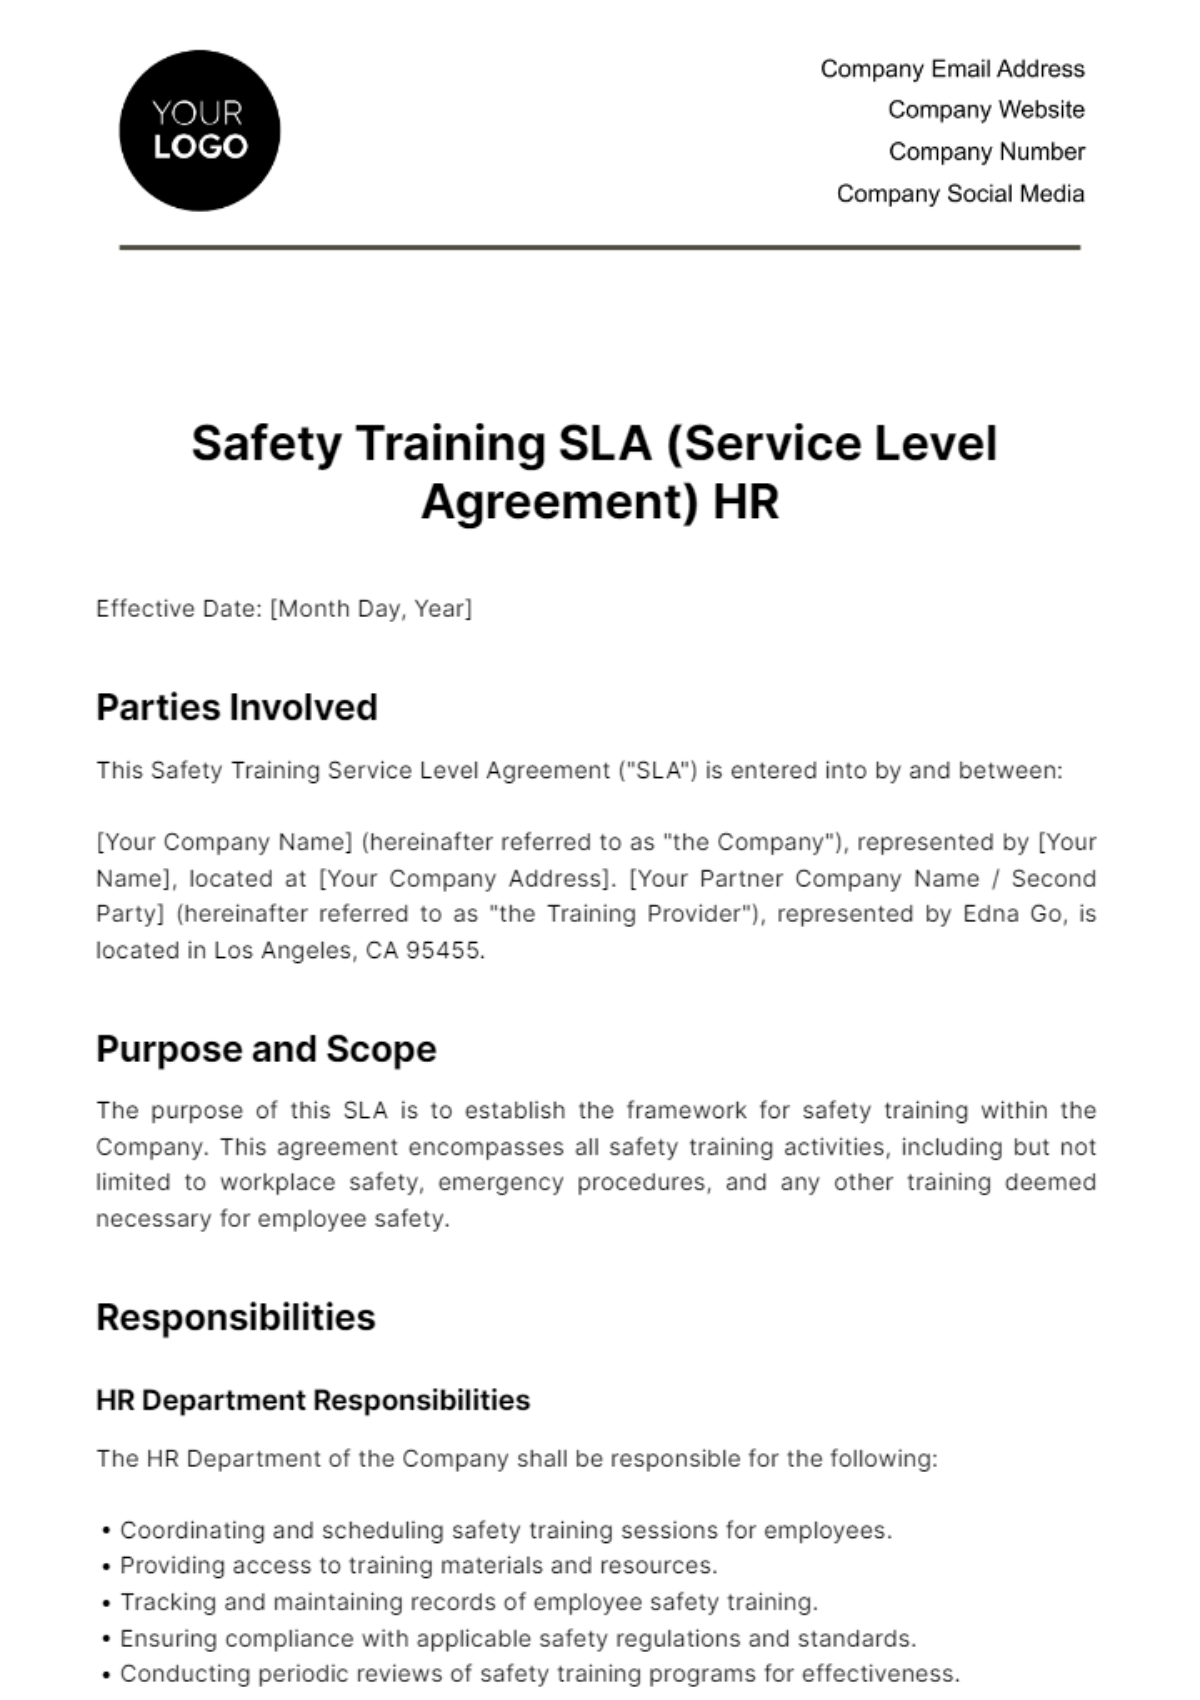 Safety Training SLA (Service Level Agreement) HR Template